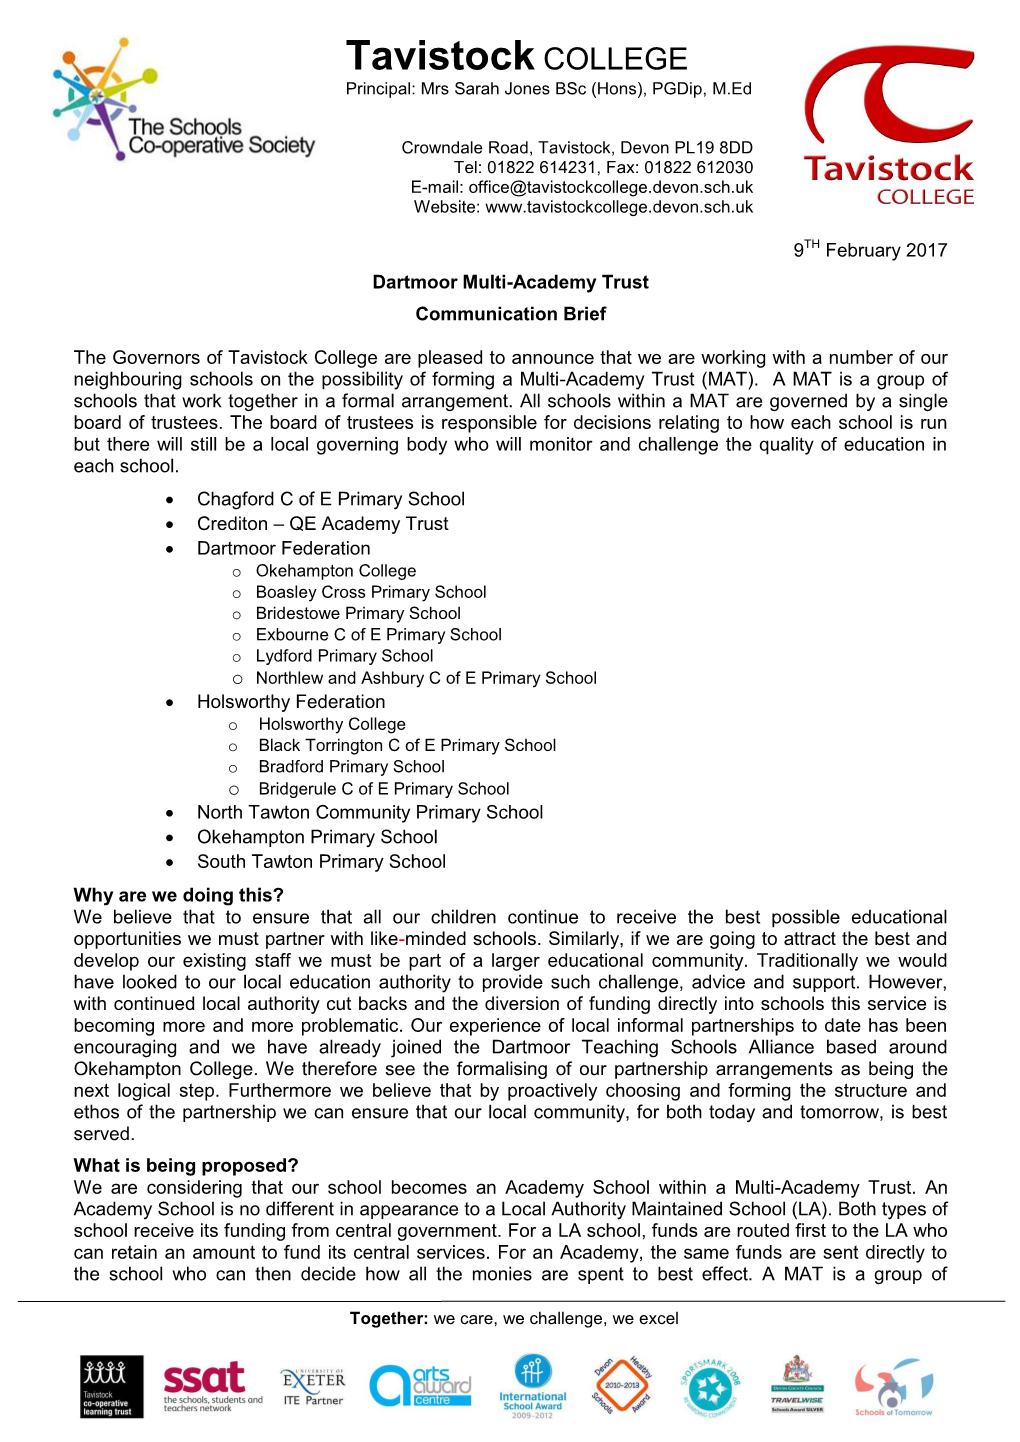 Dartmoor Multi-Academy Trust Communication